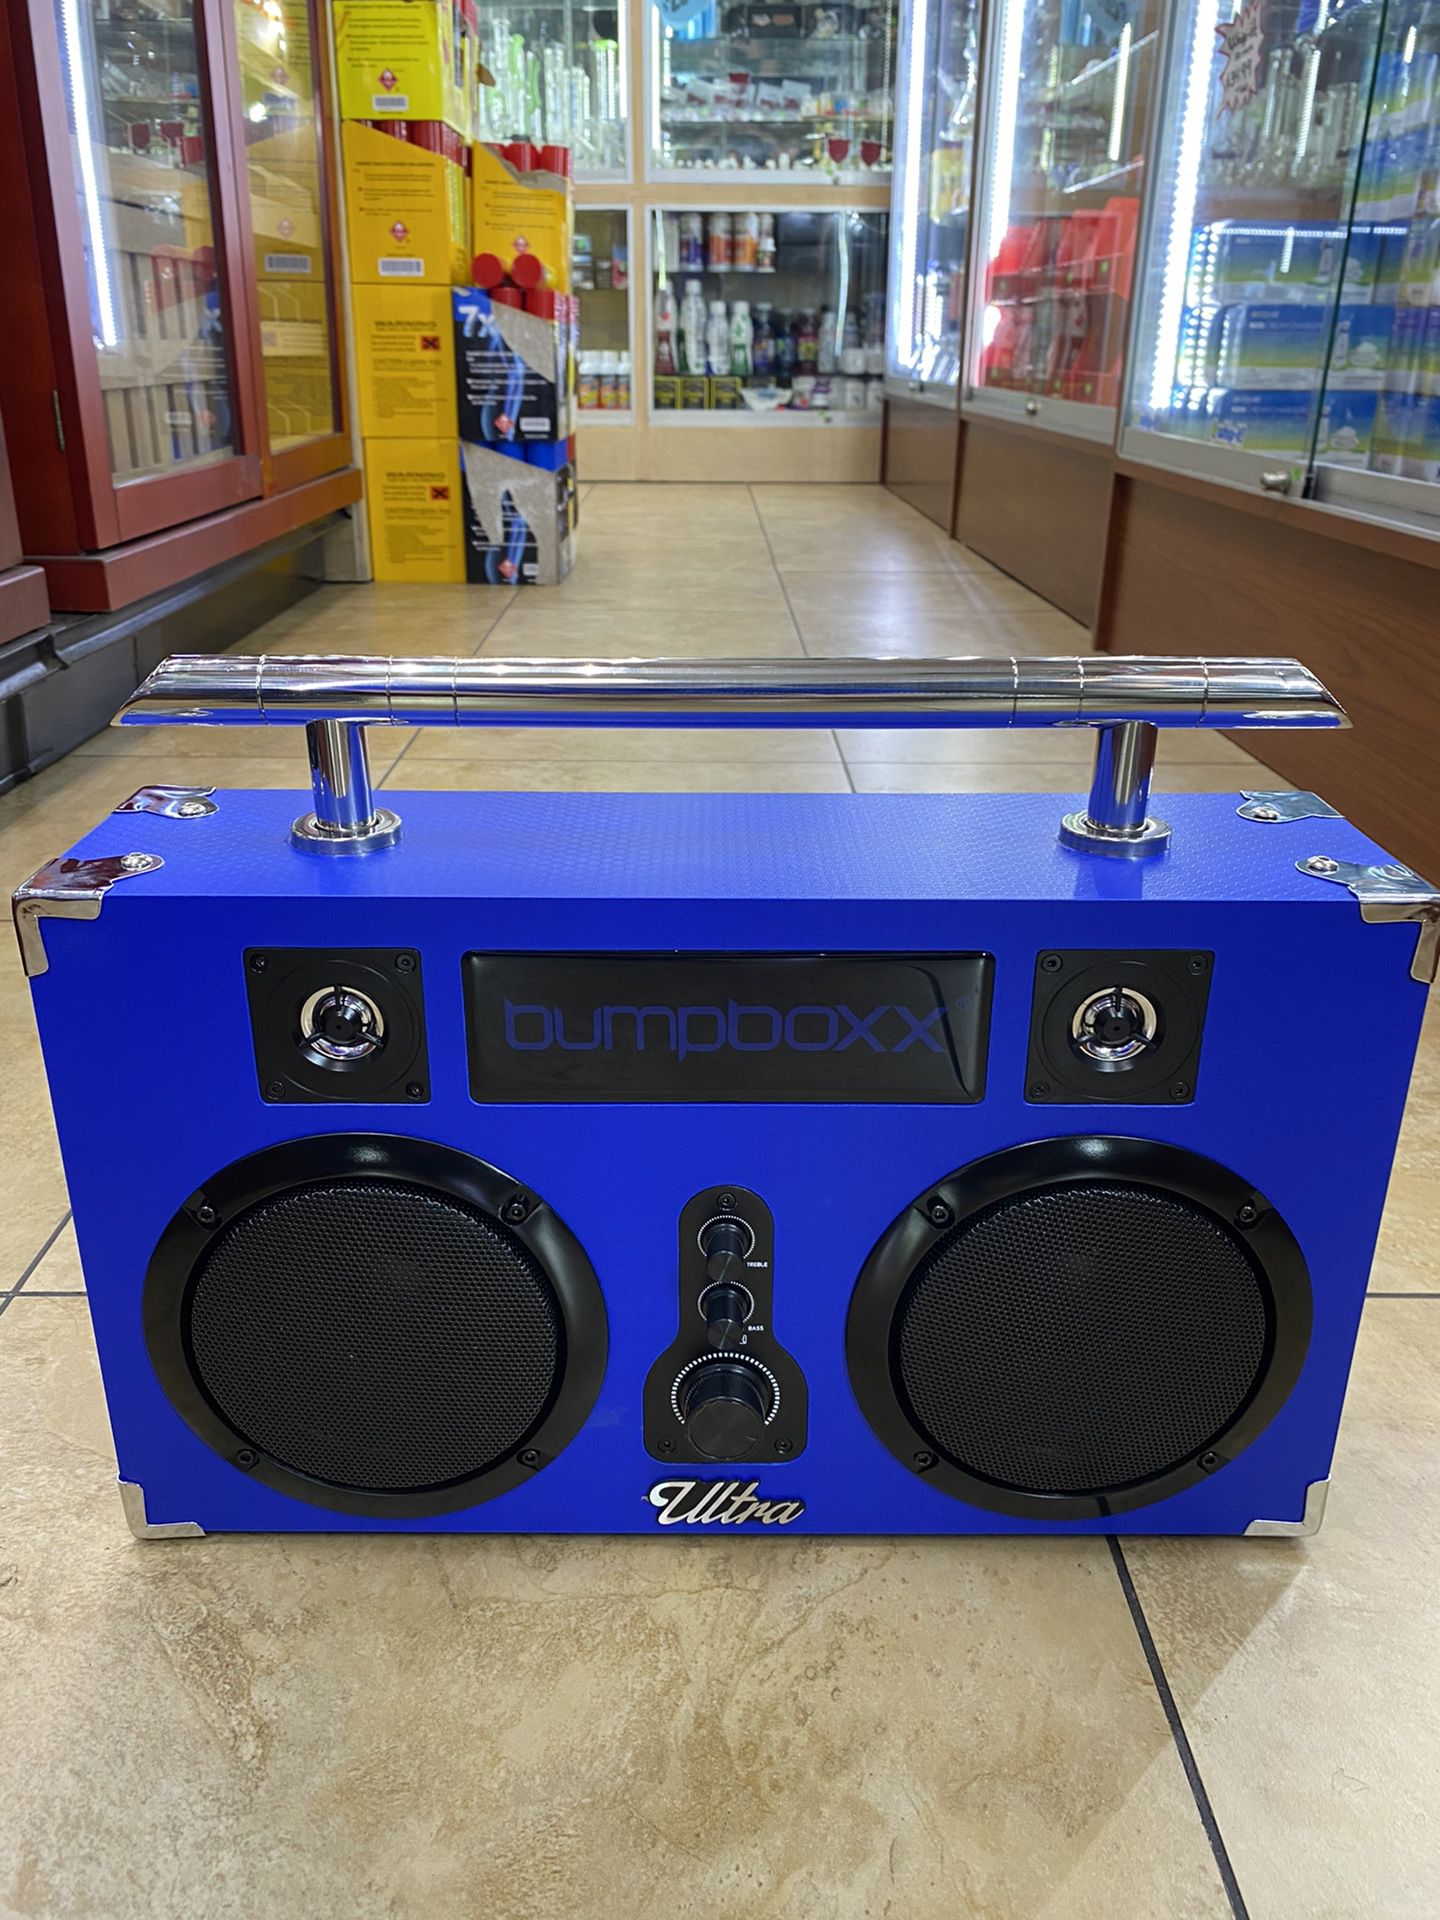 Bump box ultra Bluetooth speaker